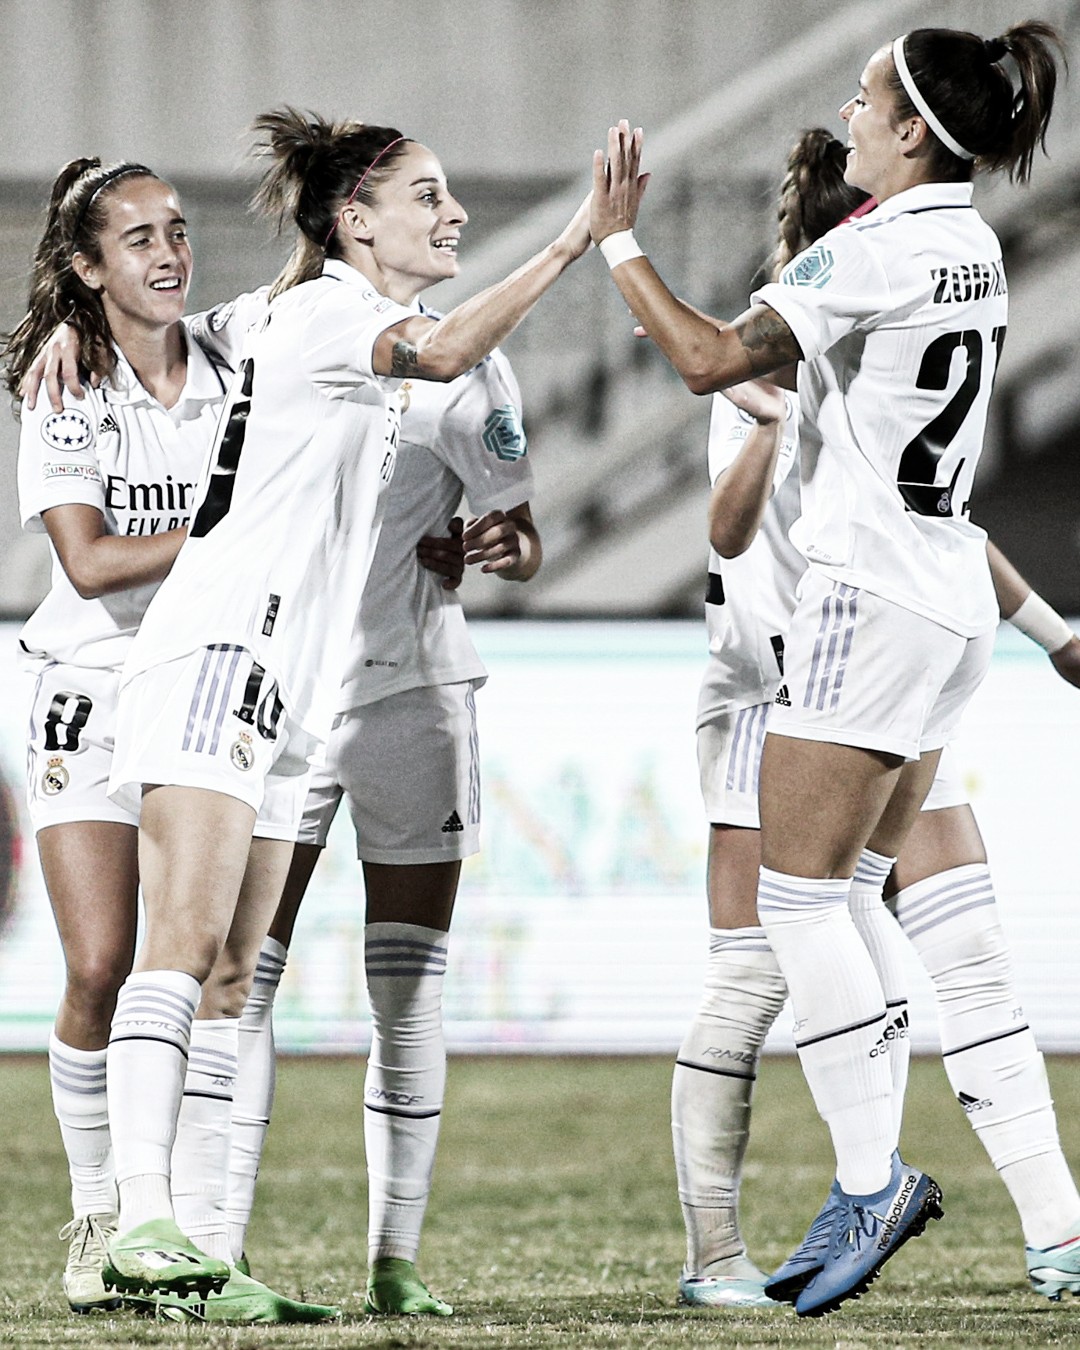 El Real Madrid femenino vuelve imbatible a casa